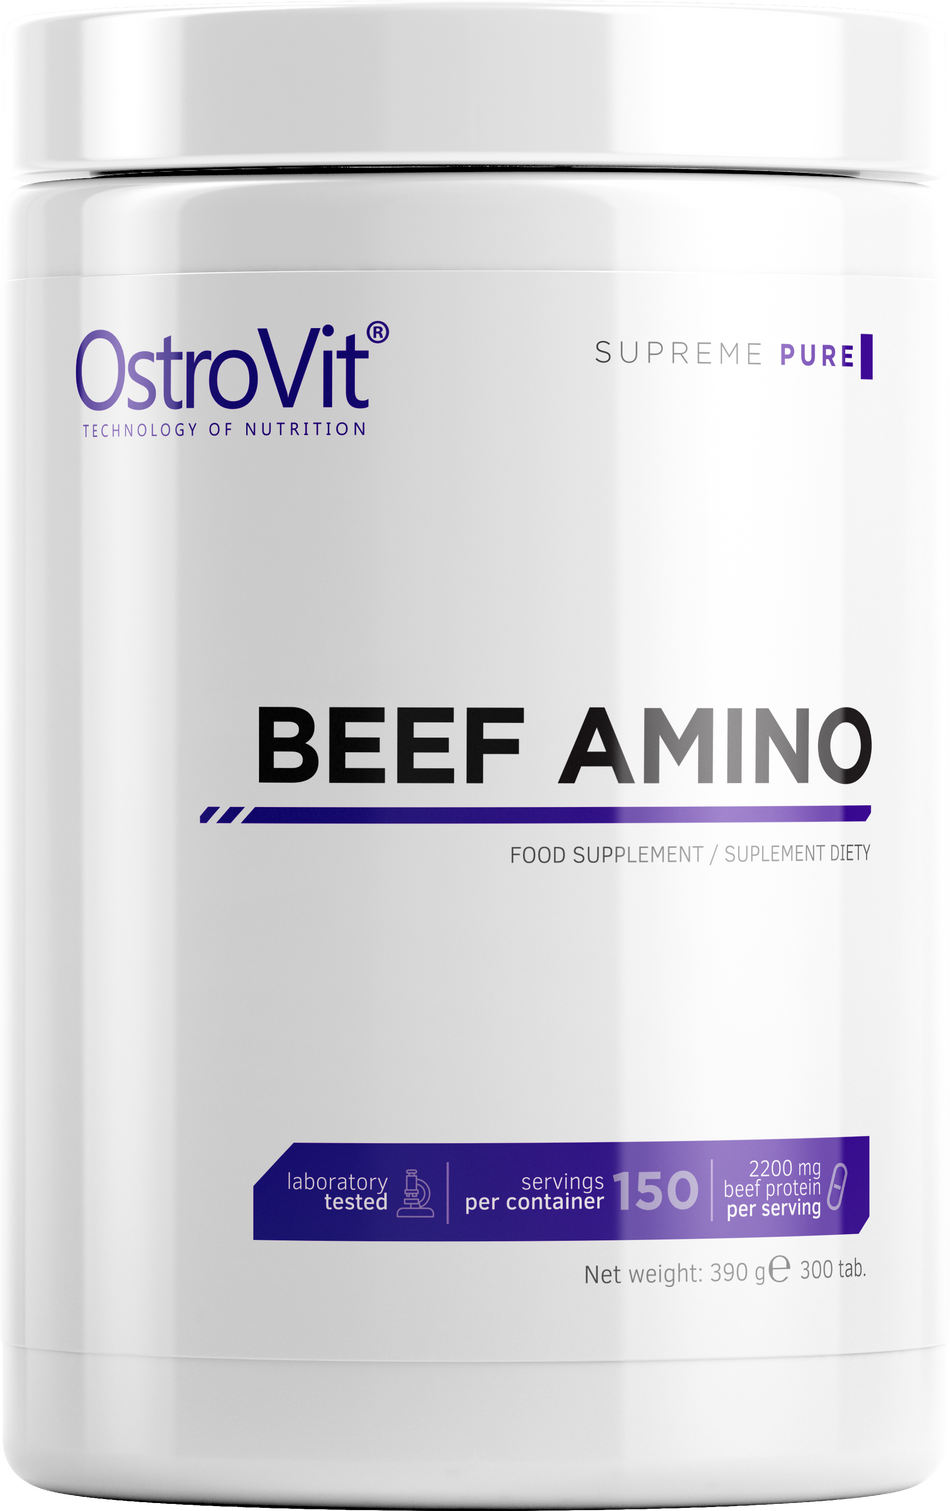 Beef Amino Supreme Pure - BadiZdrav.BG